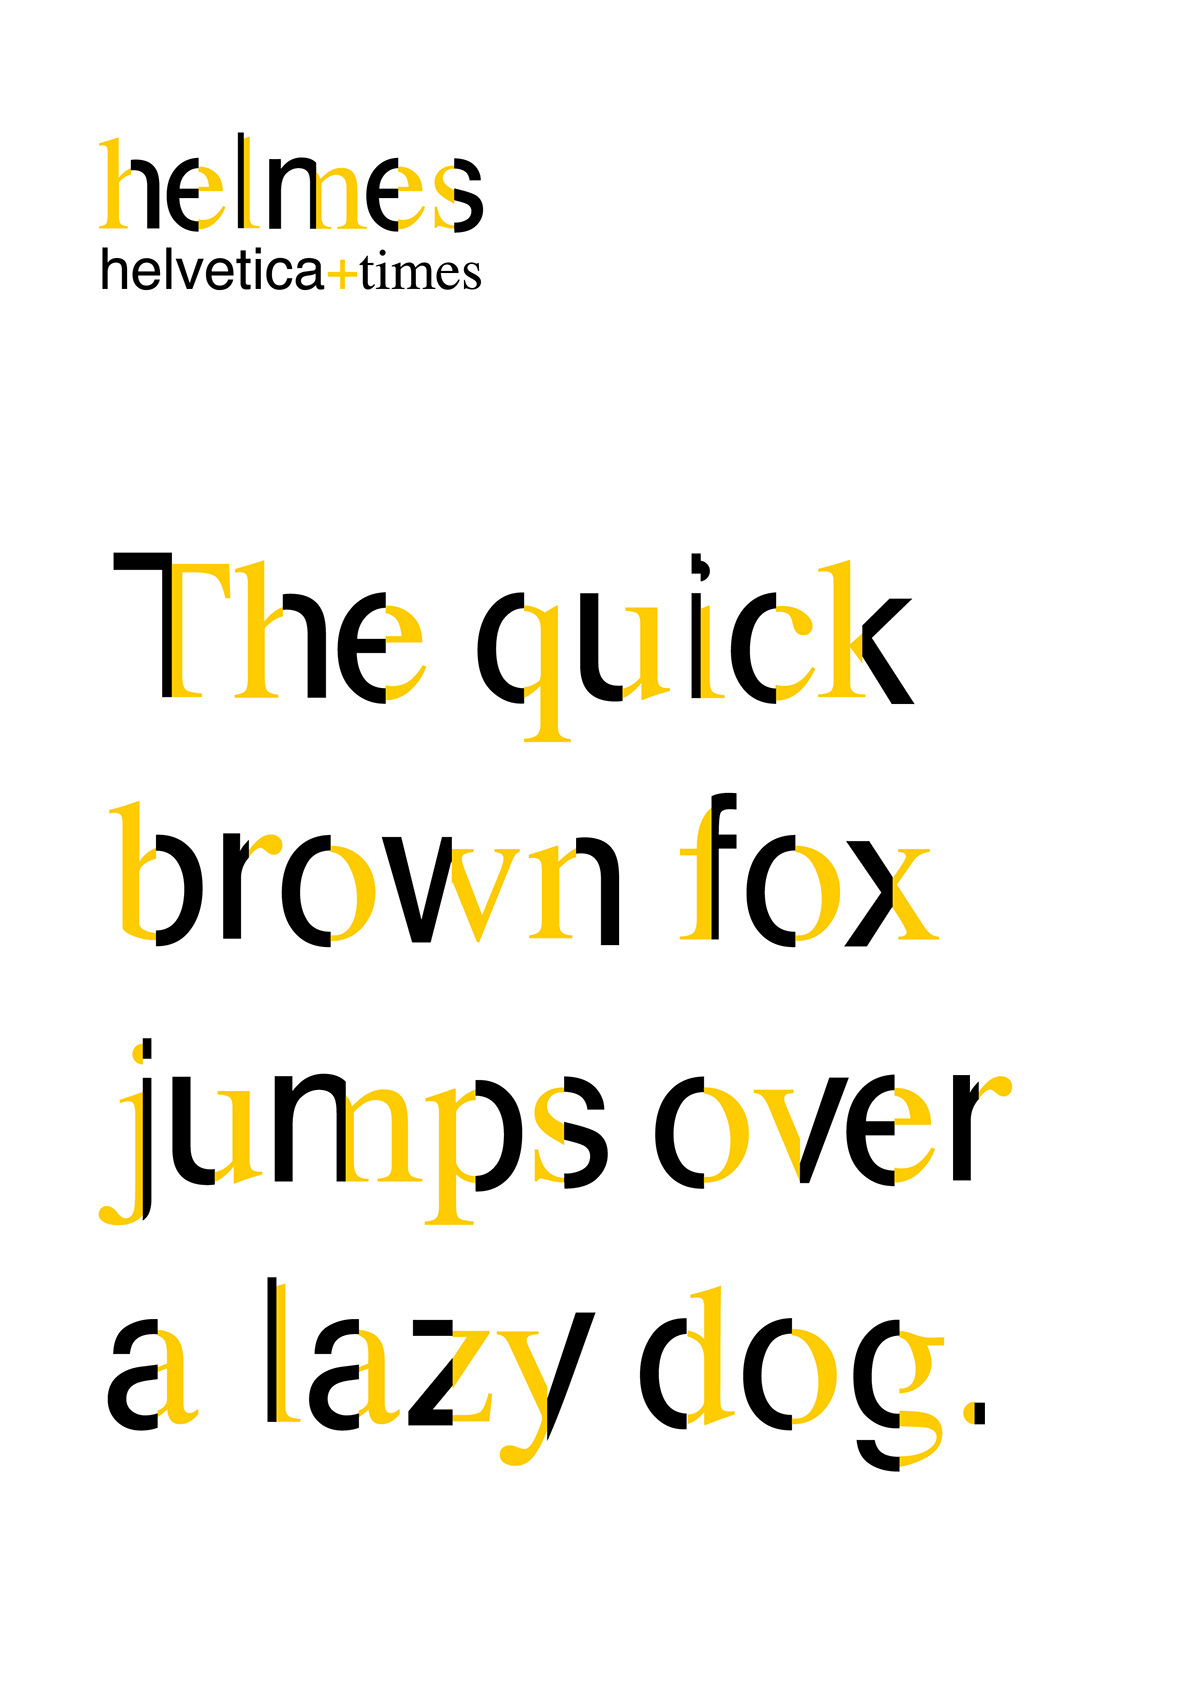 thypography HELMES times helvetica